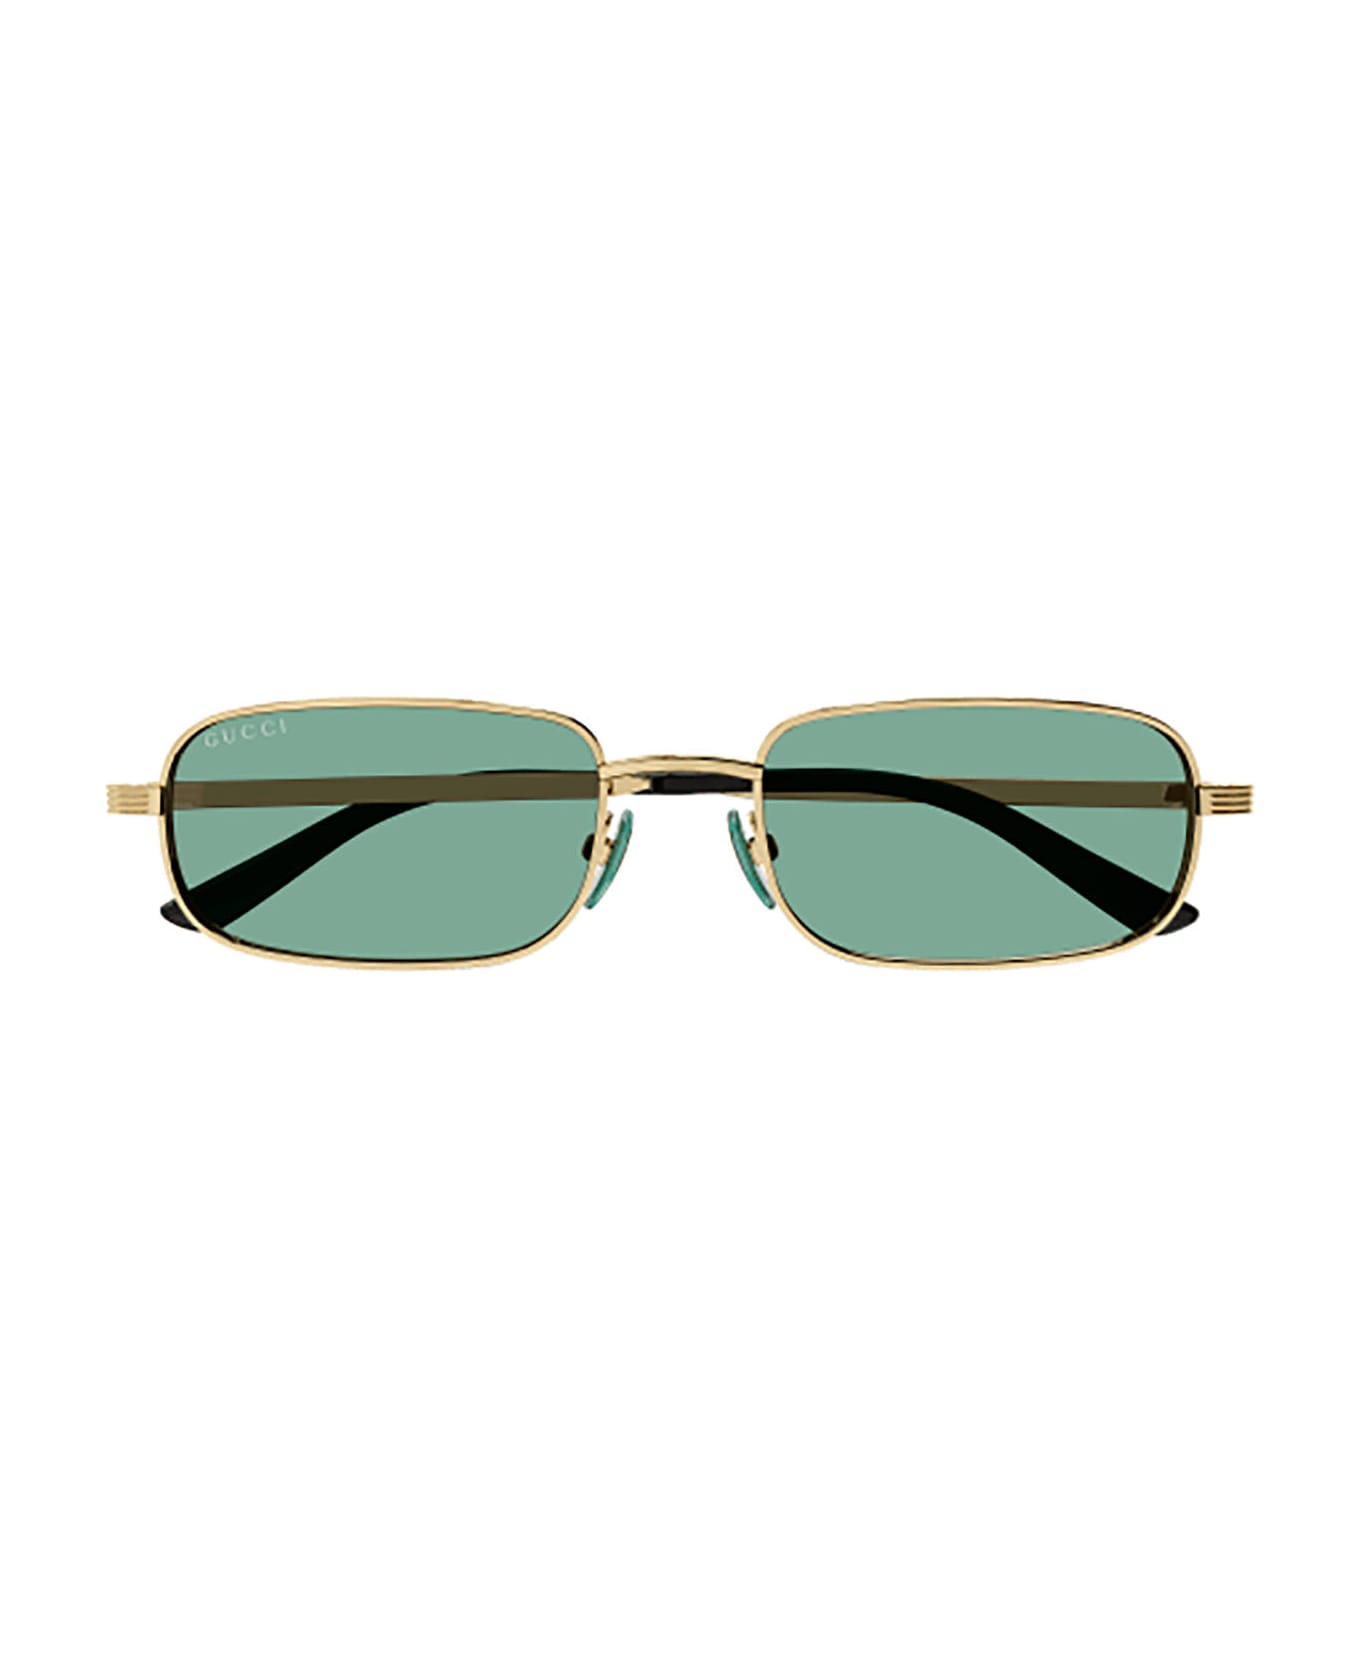 Gucci Eyewear Gg1457s Sunglasses - 005 gold gold green